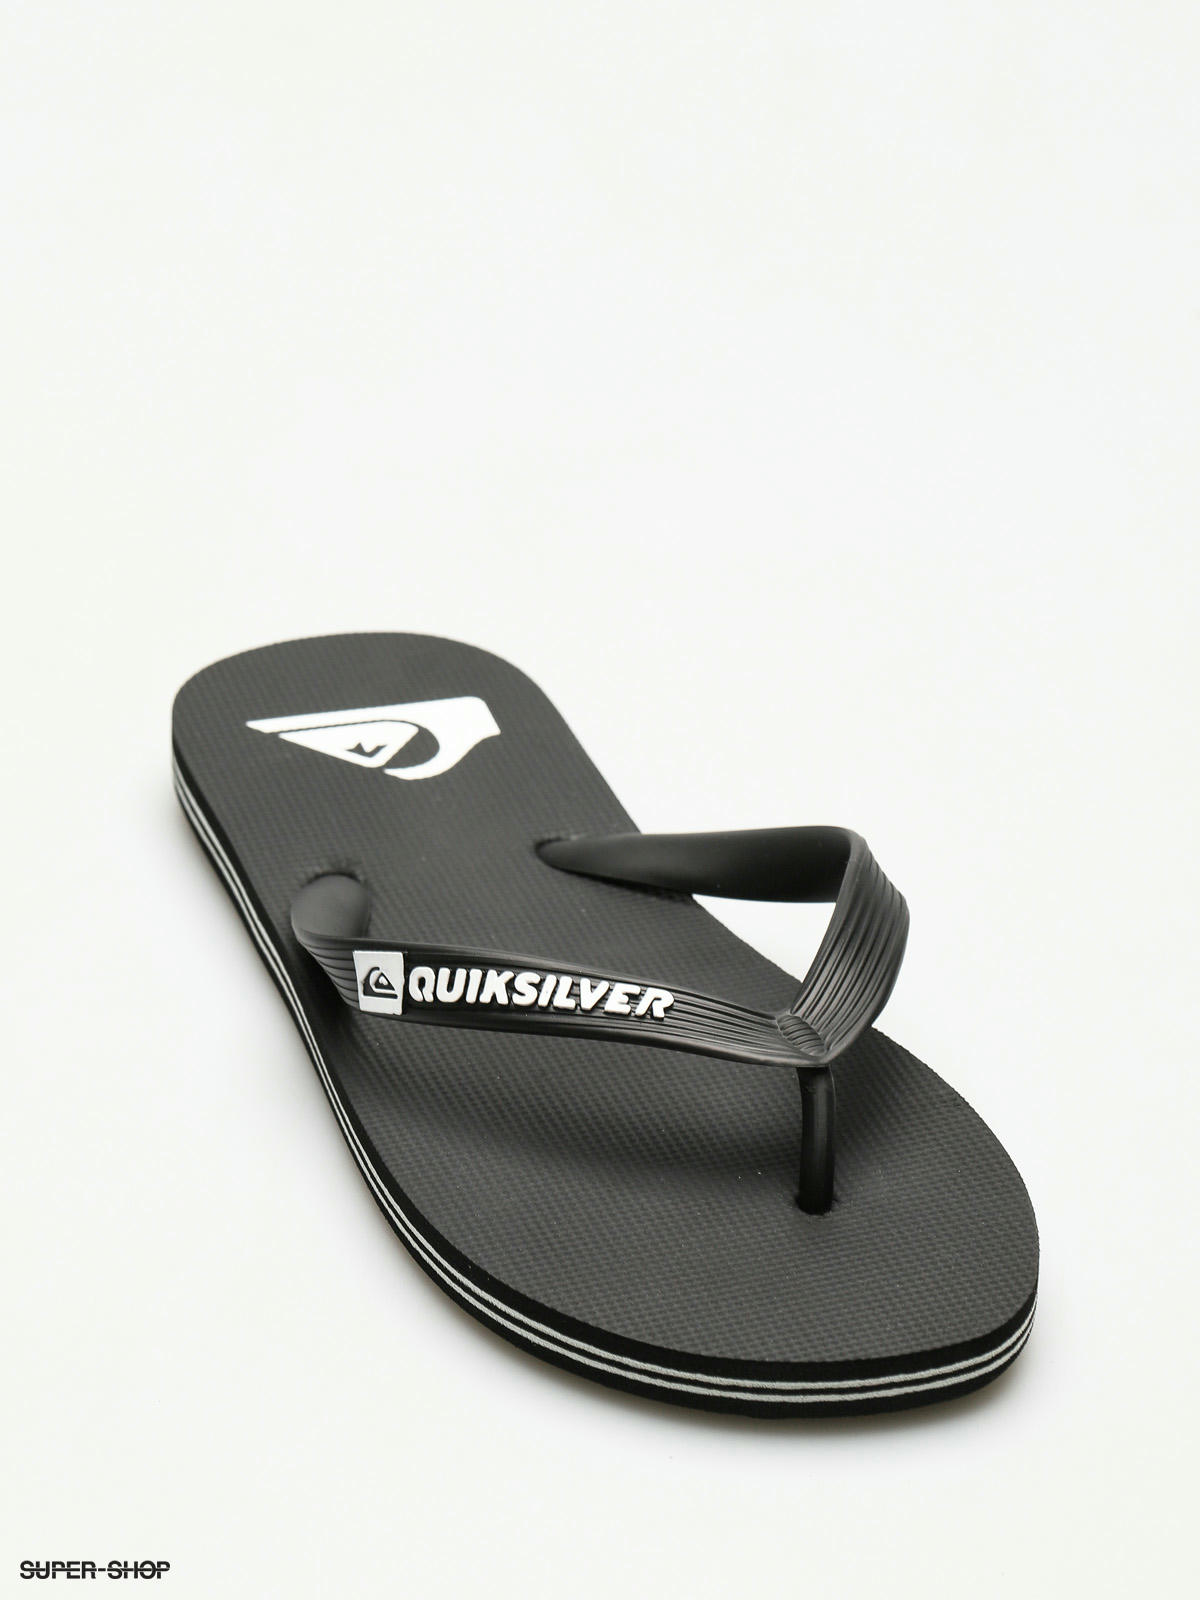 quiksilver slippers